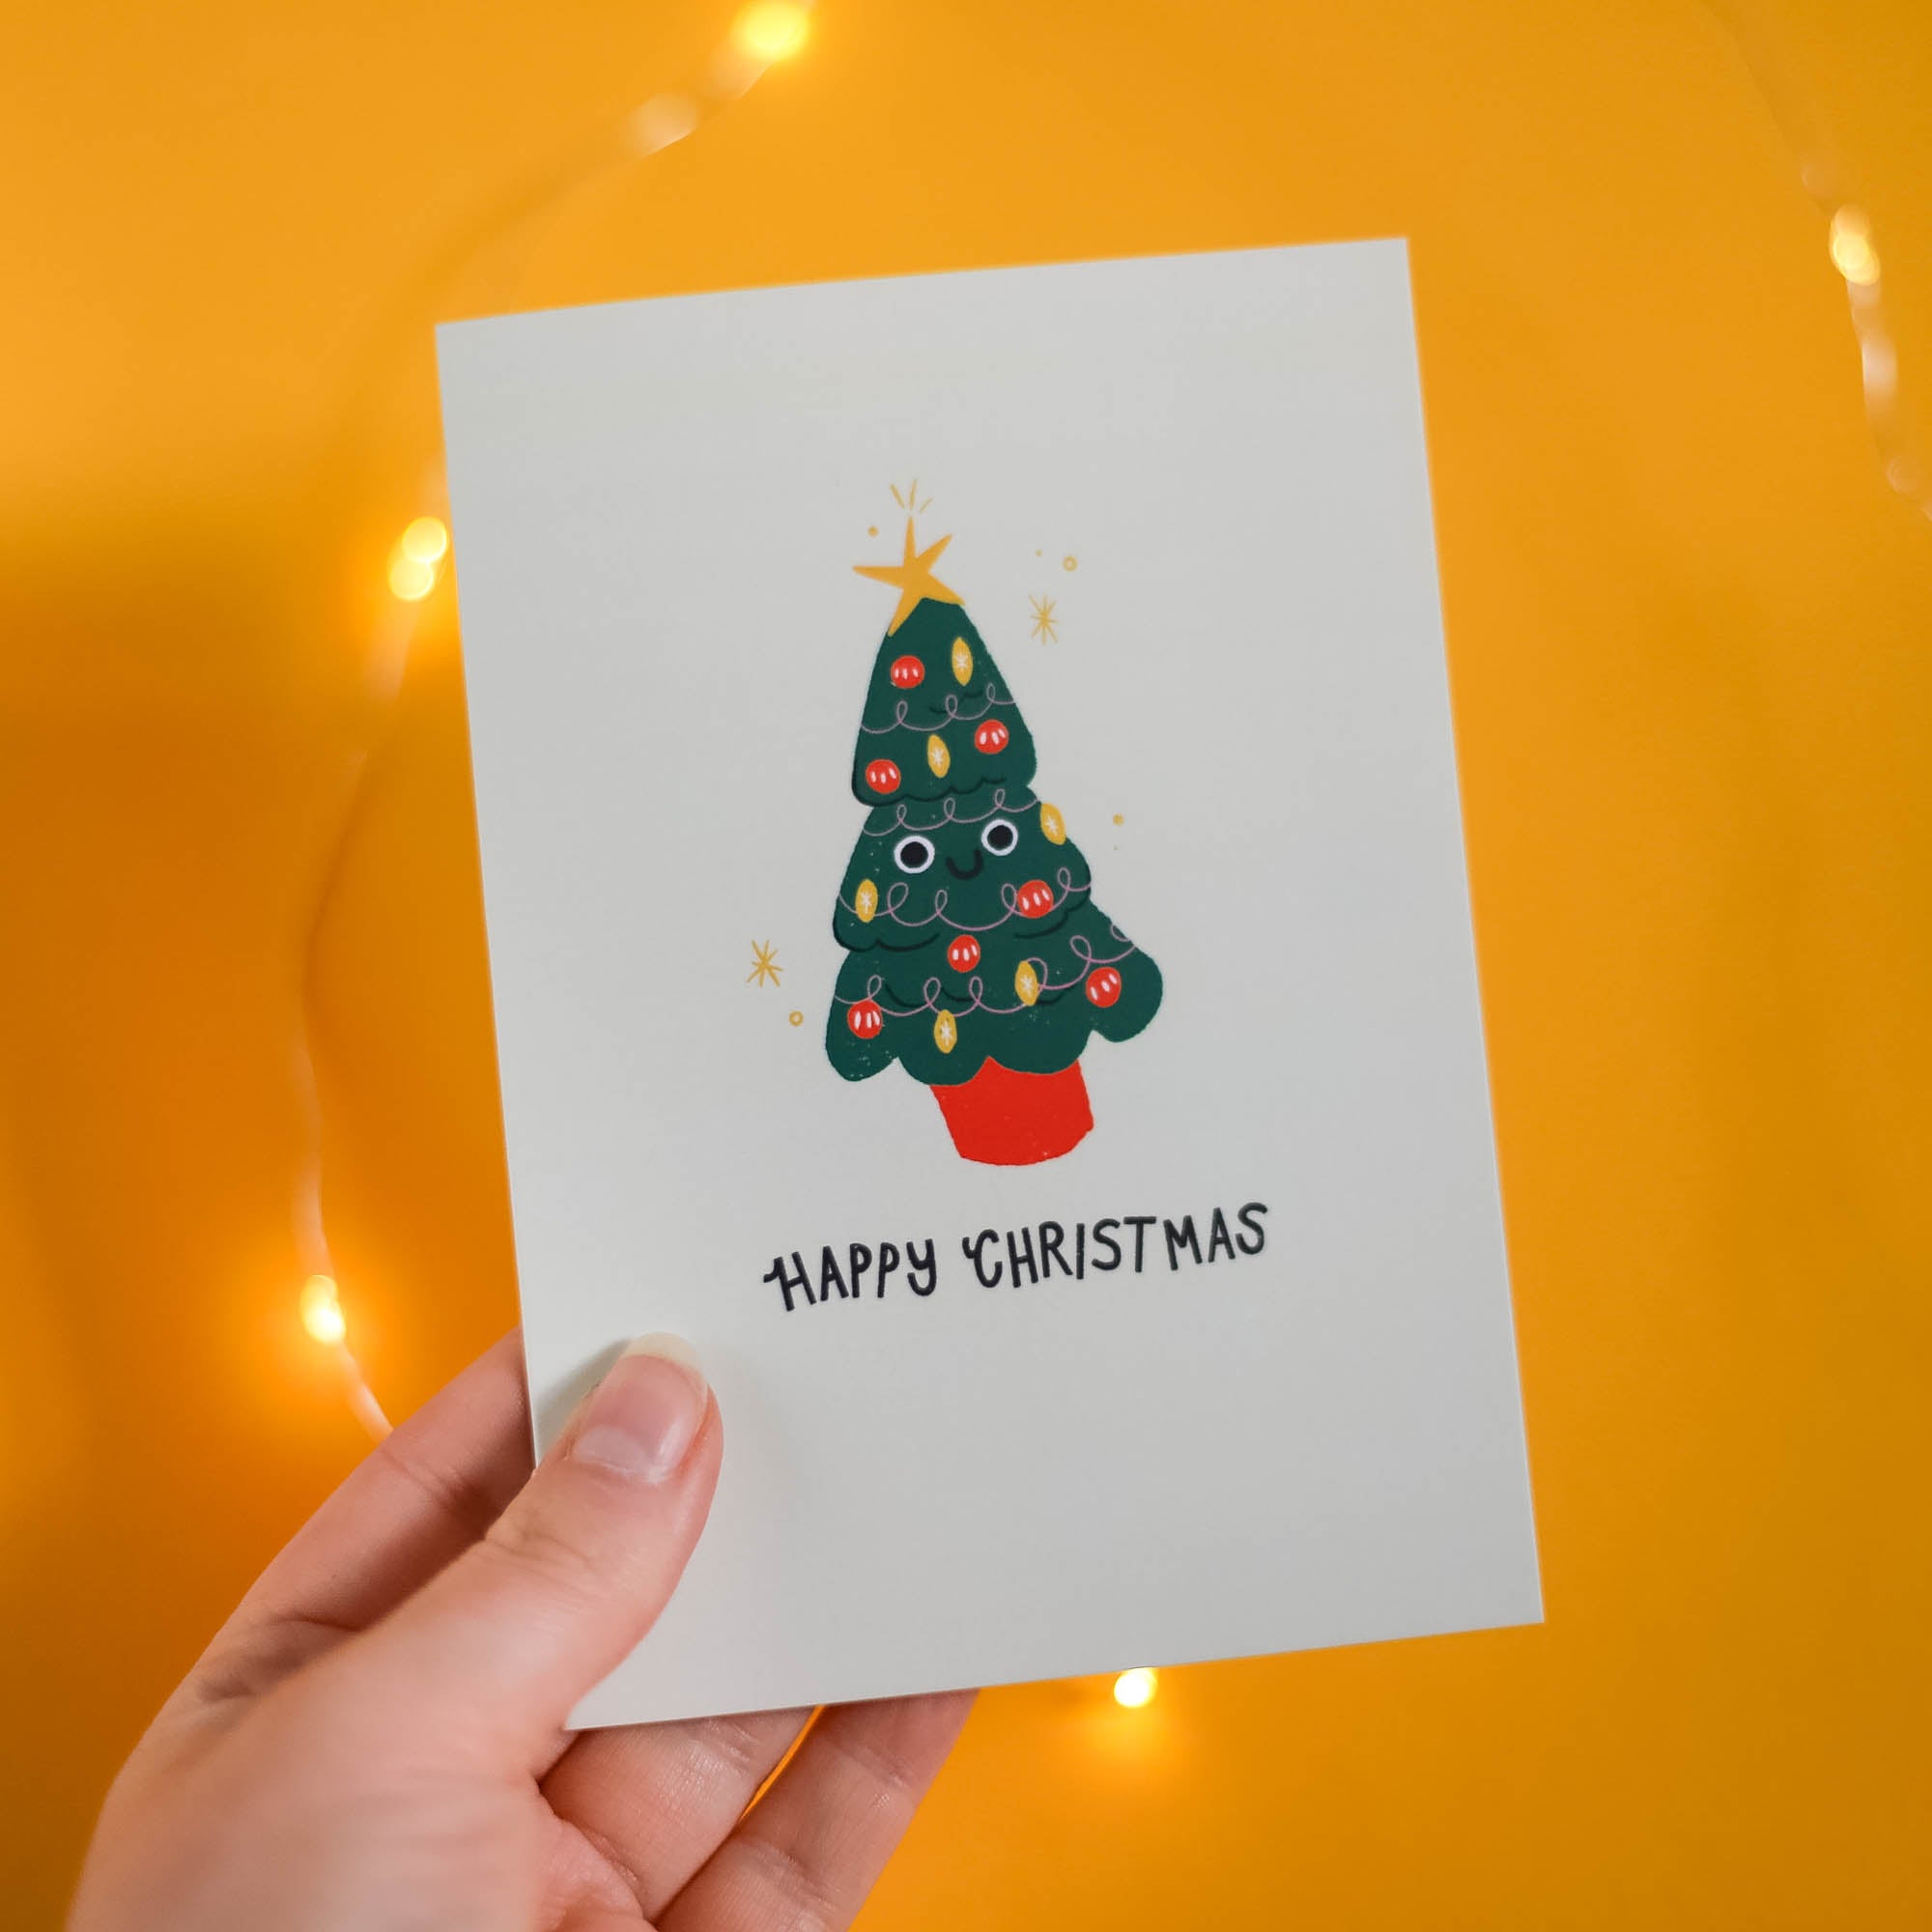 Happy Christmas Tree Card - Finest Imaginary